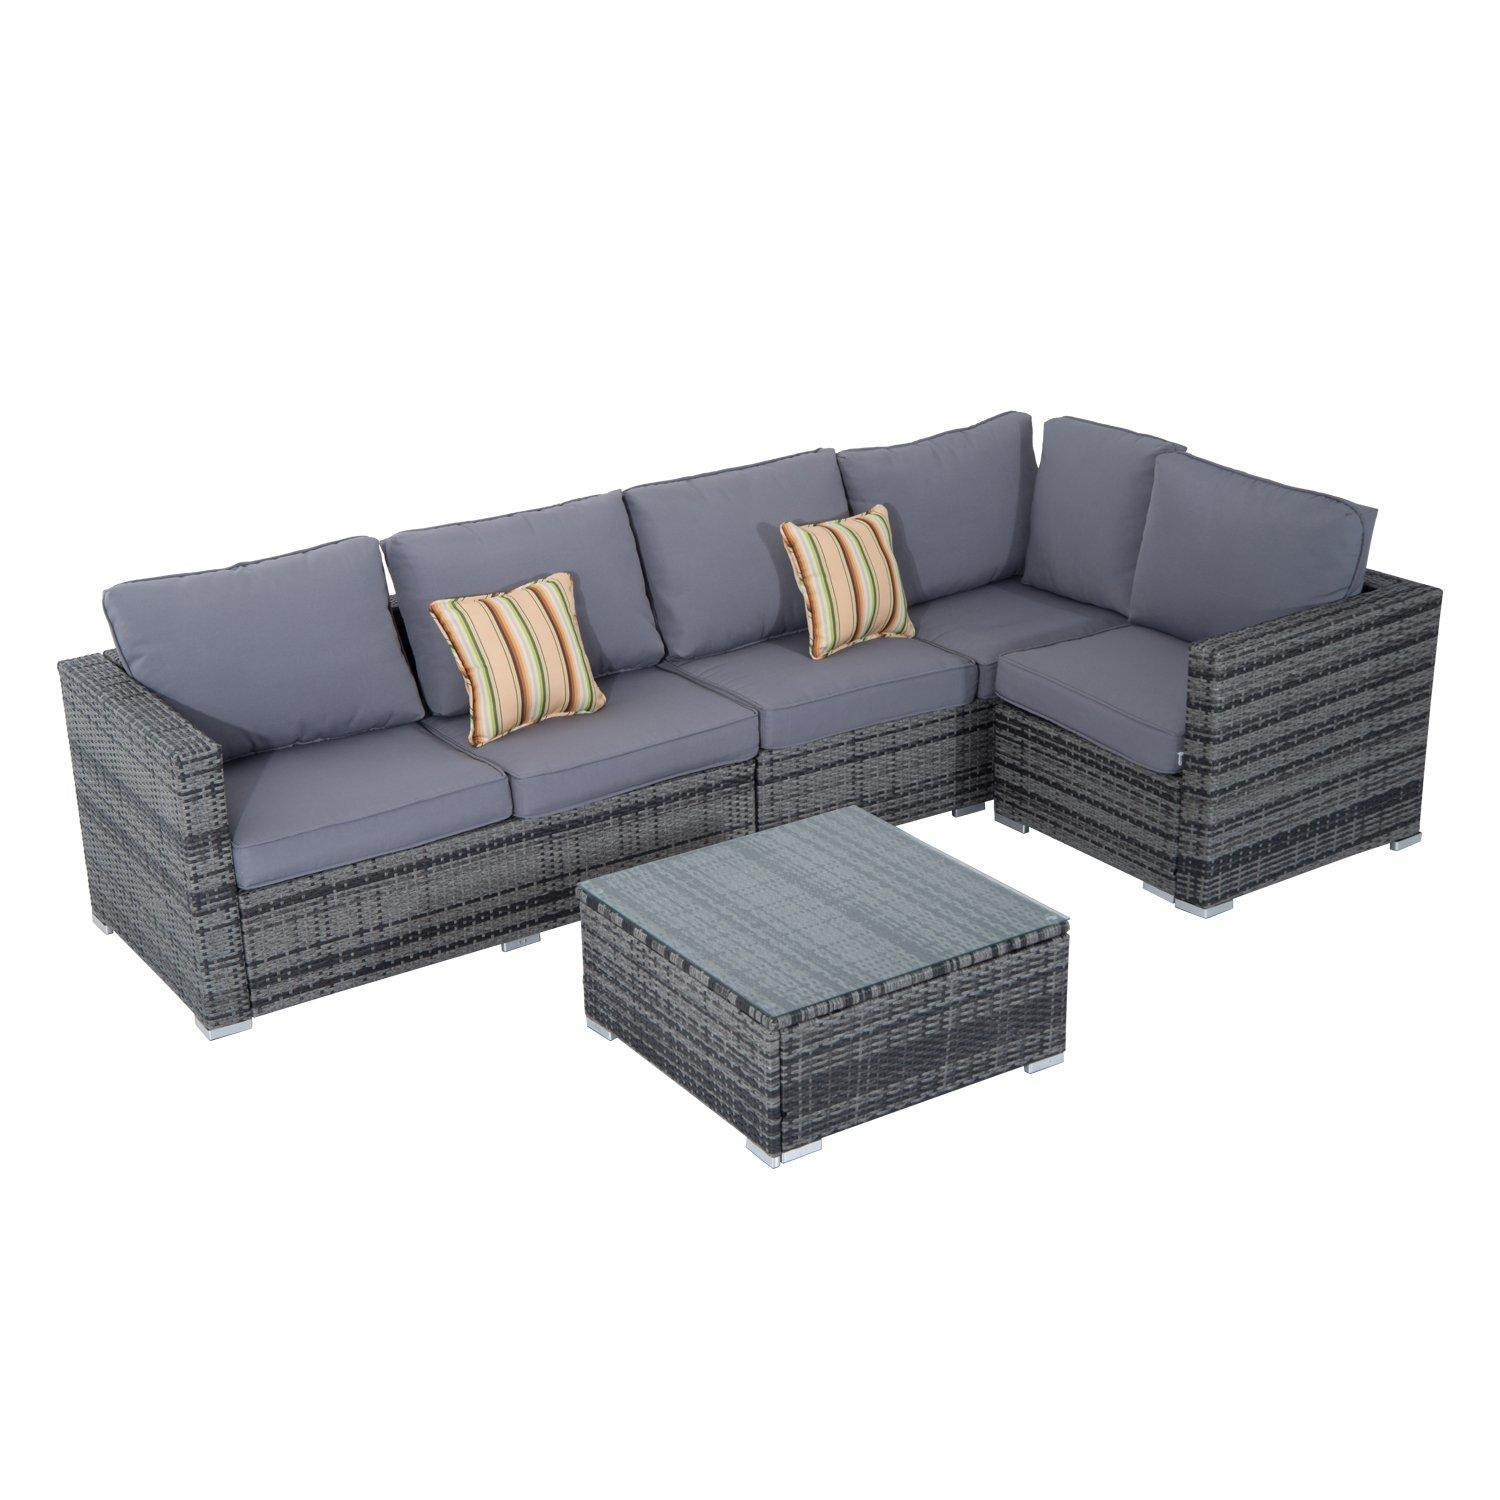 4 PCs Rattan Furniture Set Sofa Chair Seat Wicker Coffee Table Aluminum Grey - image 1